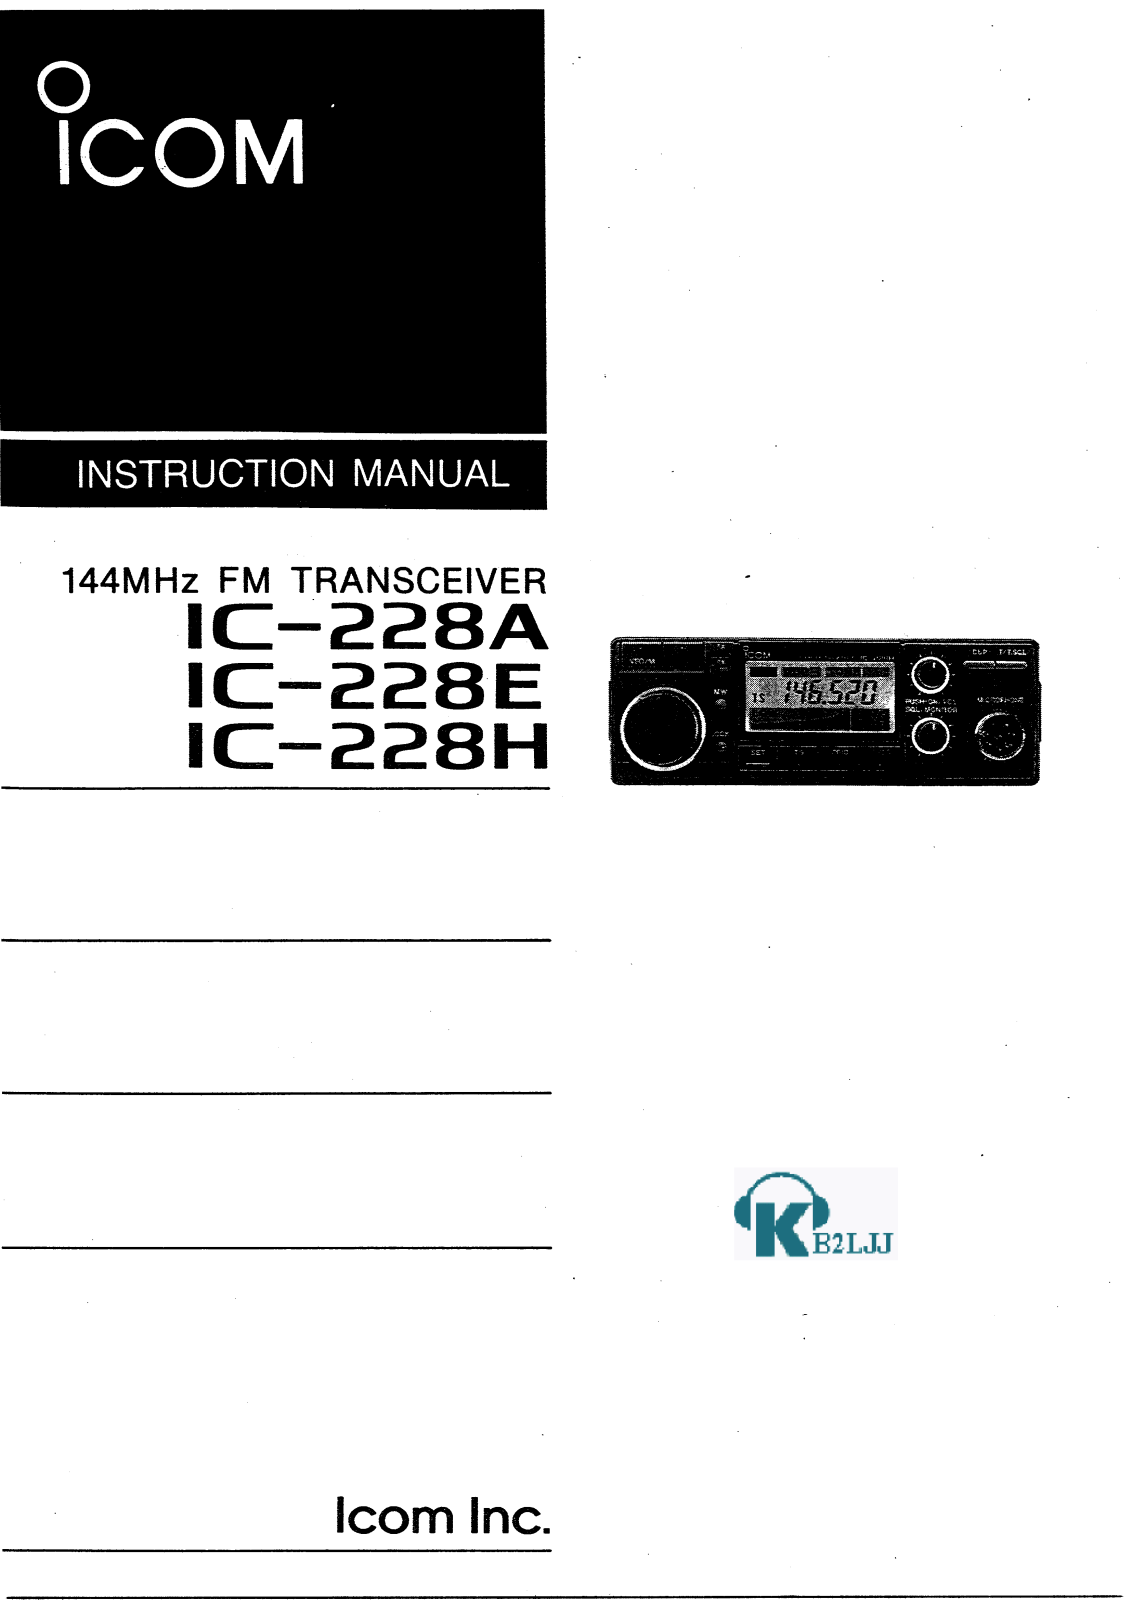 Icom IC-228H, IC-228E, IC-228A Manual